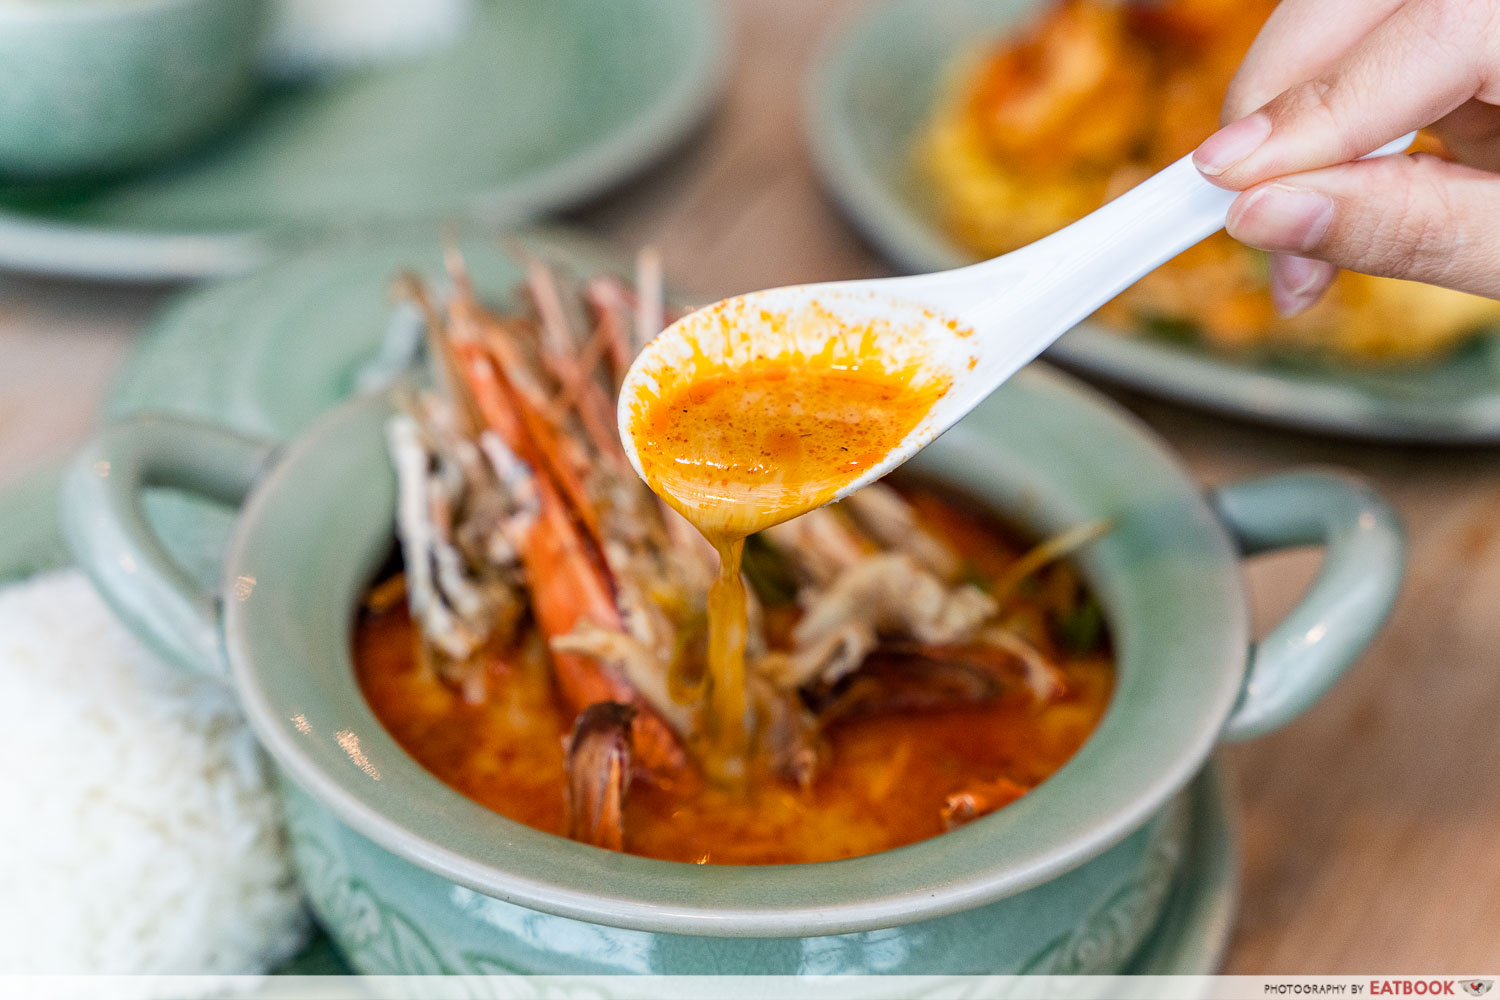 dusit thani greenhouse - tom yum goong soup